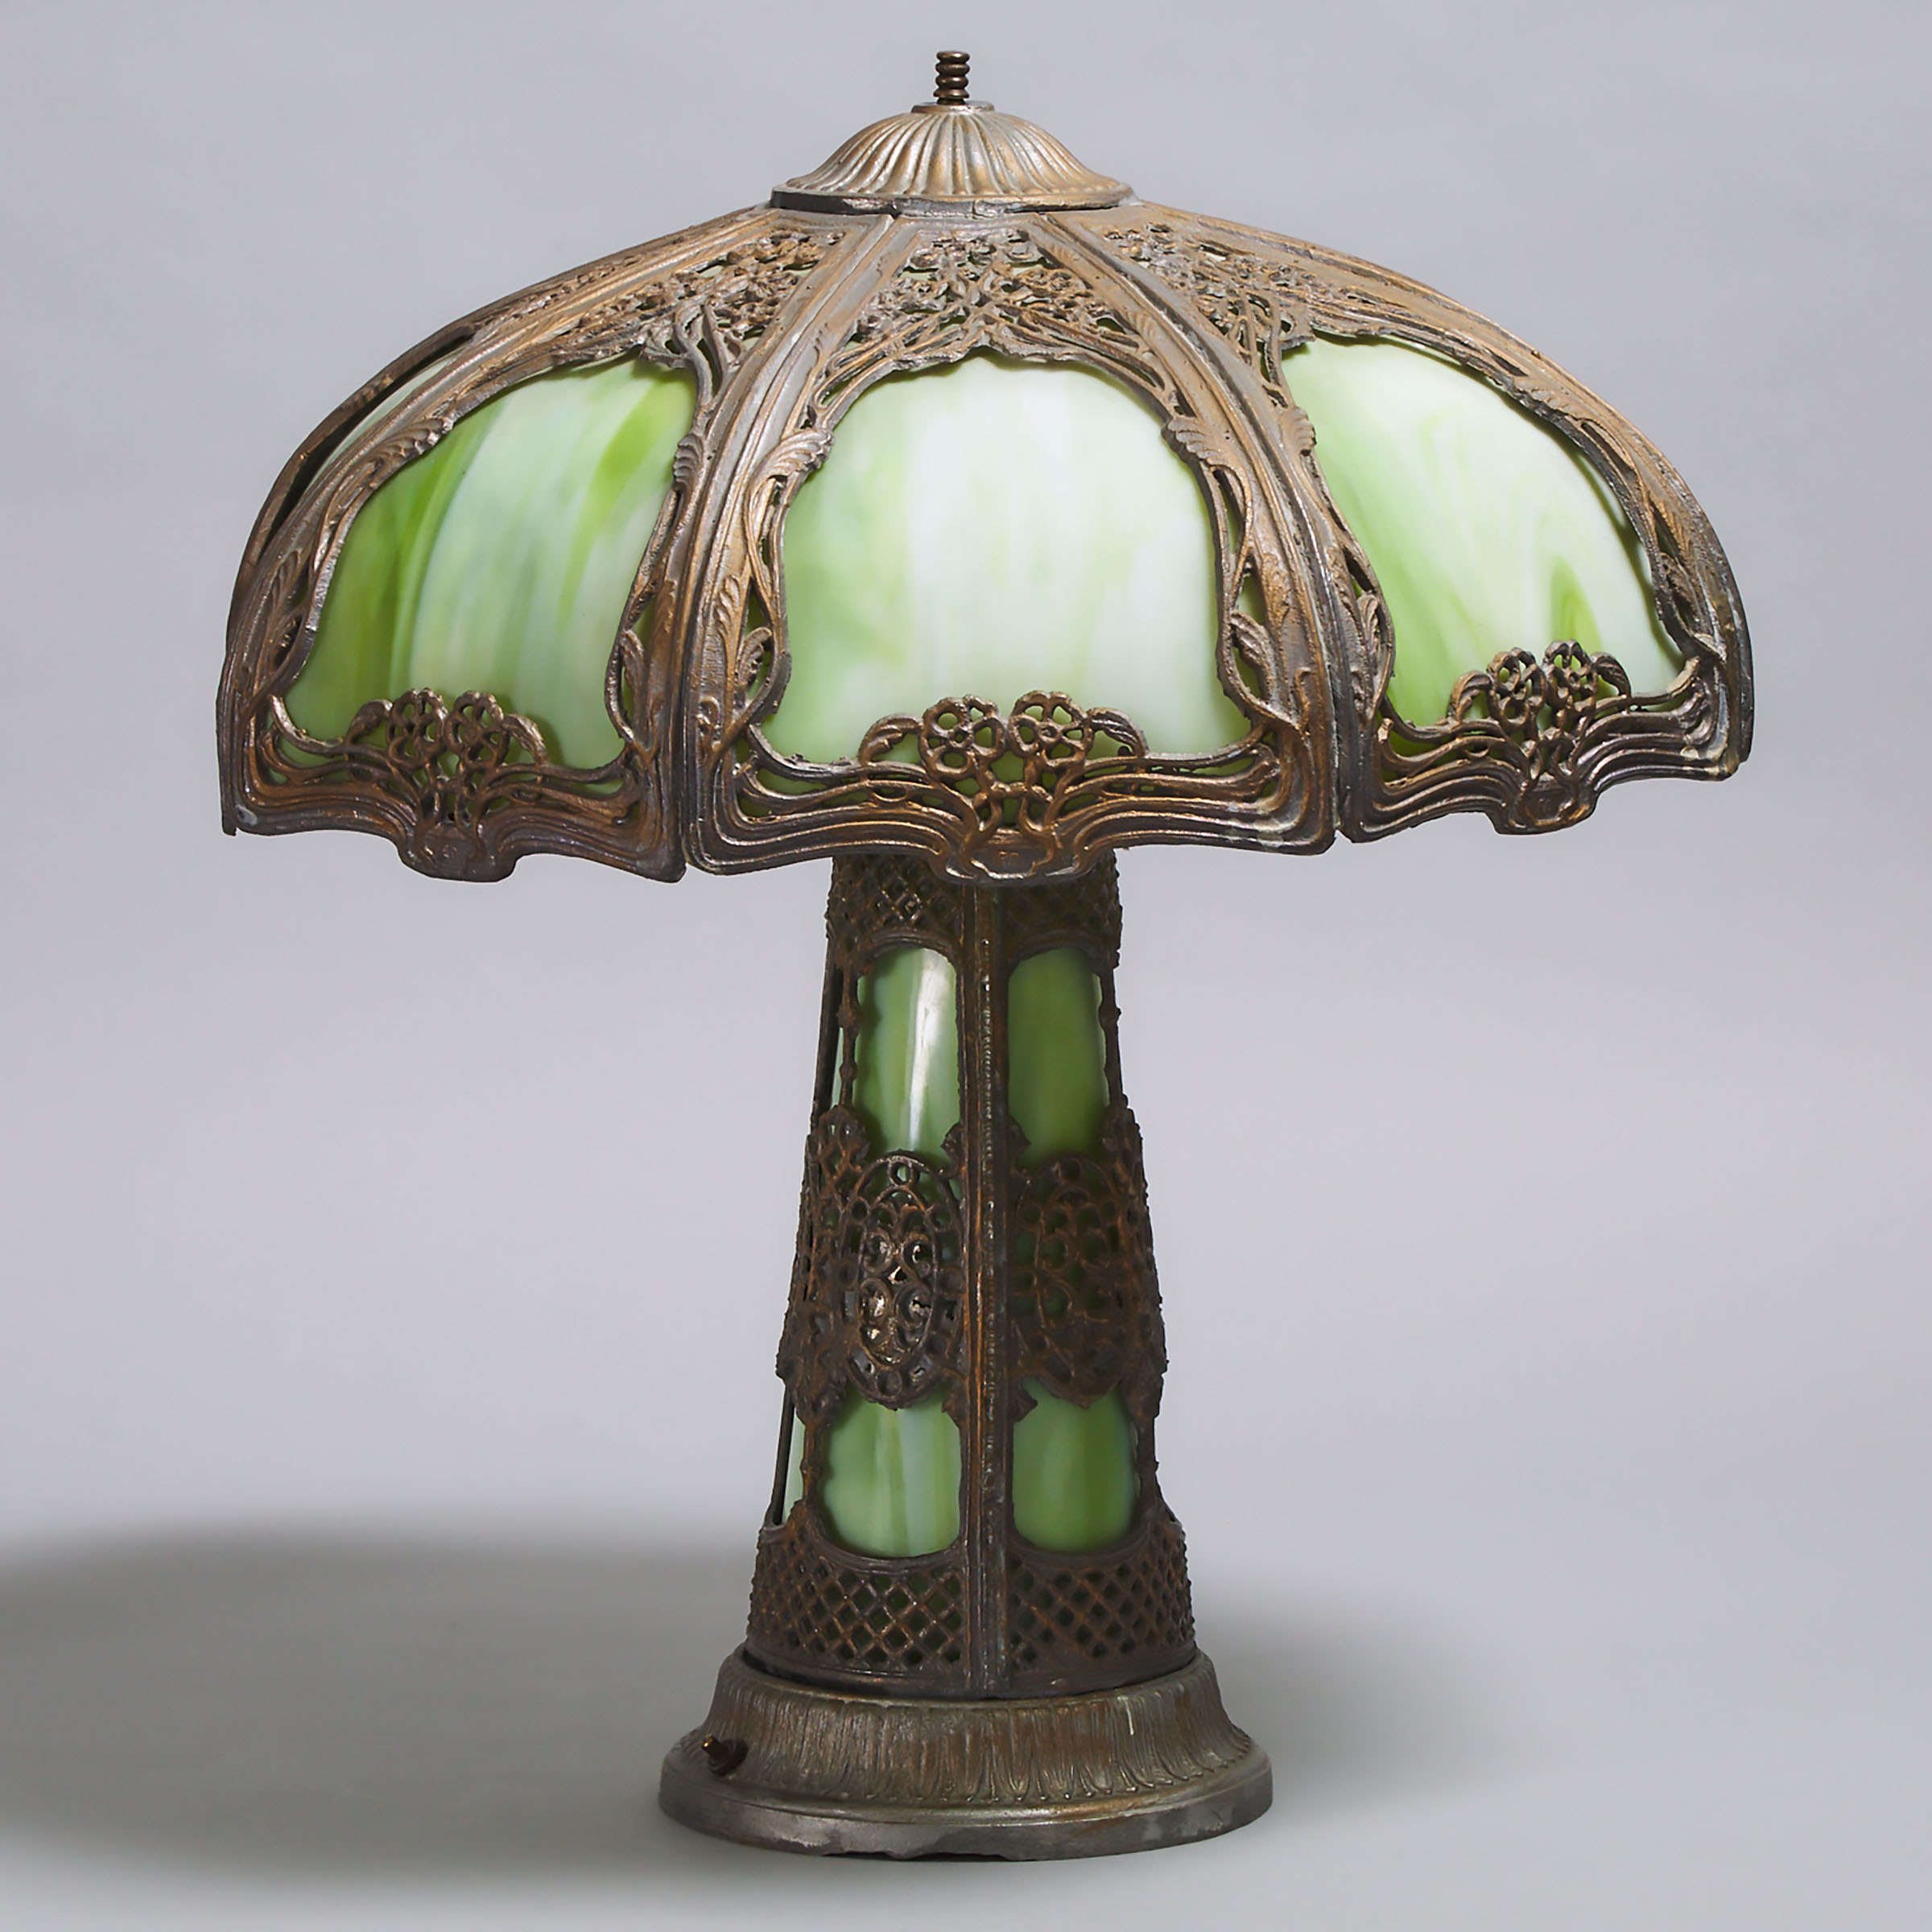 Edward Miller & Co. Art Nouveau Slag Glass Table Lamp, Meriden, Ct., early 20th century